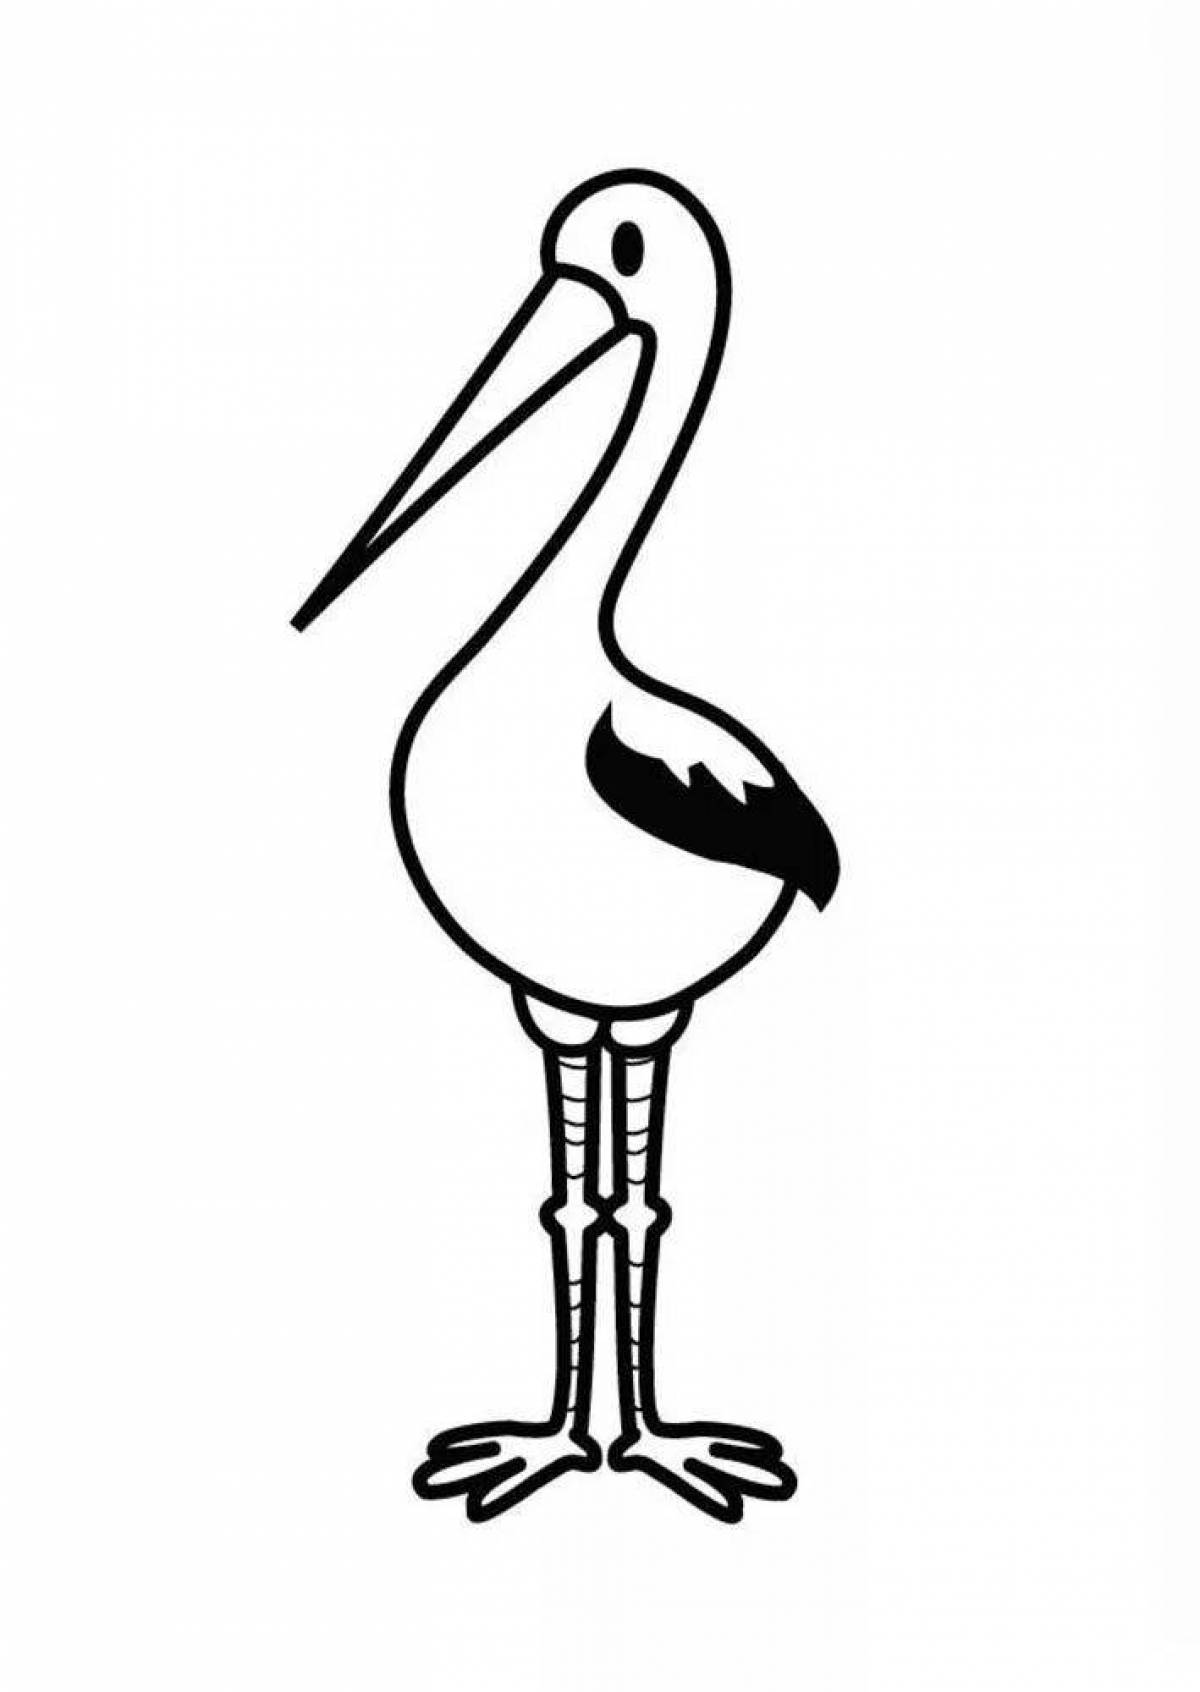 Coloring page graceful black stork